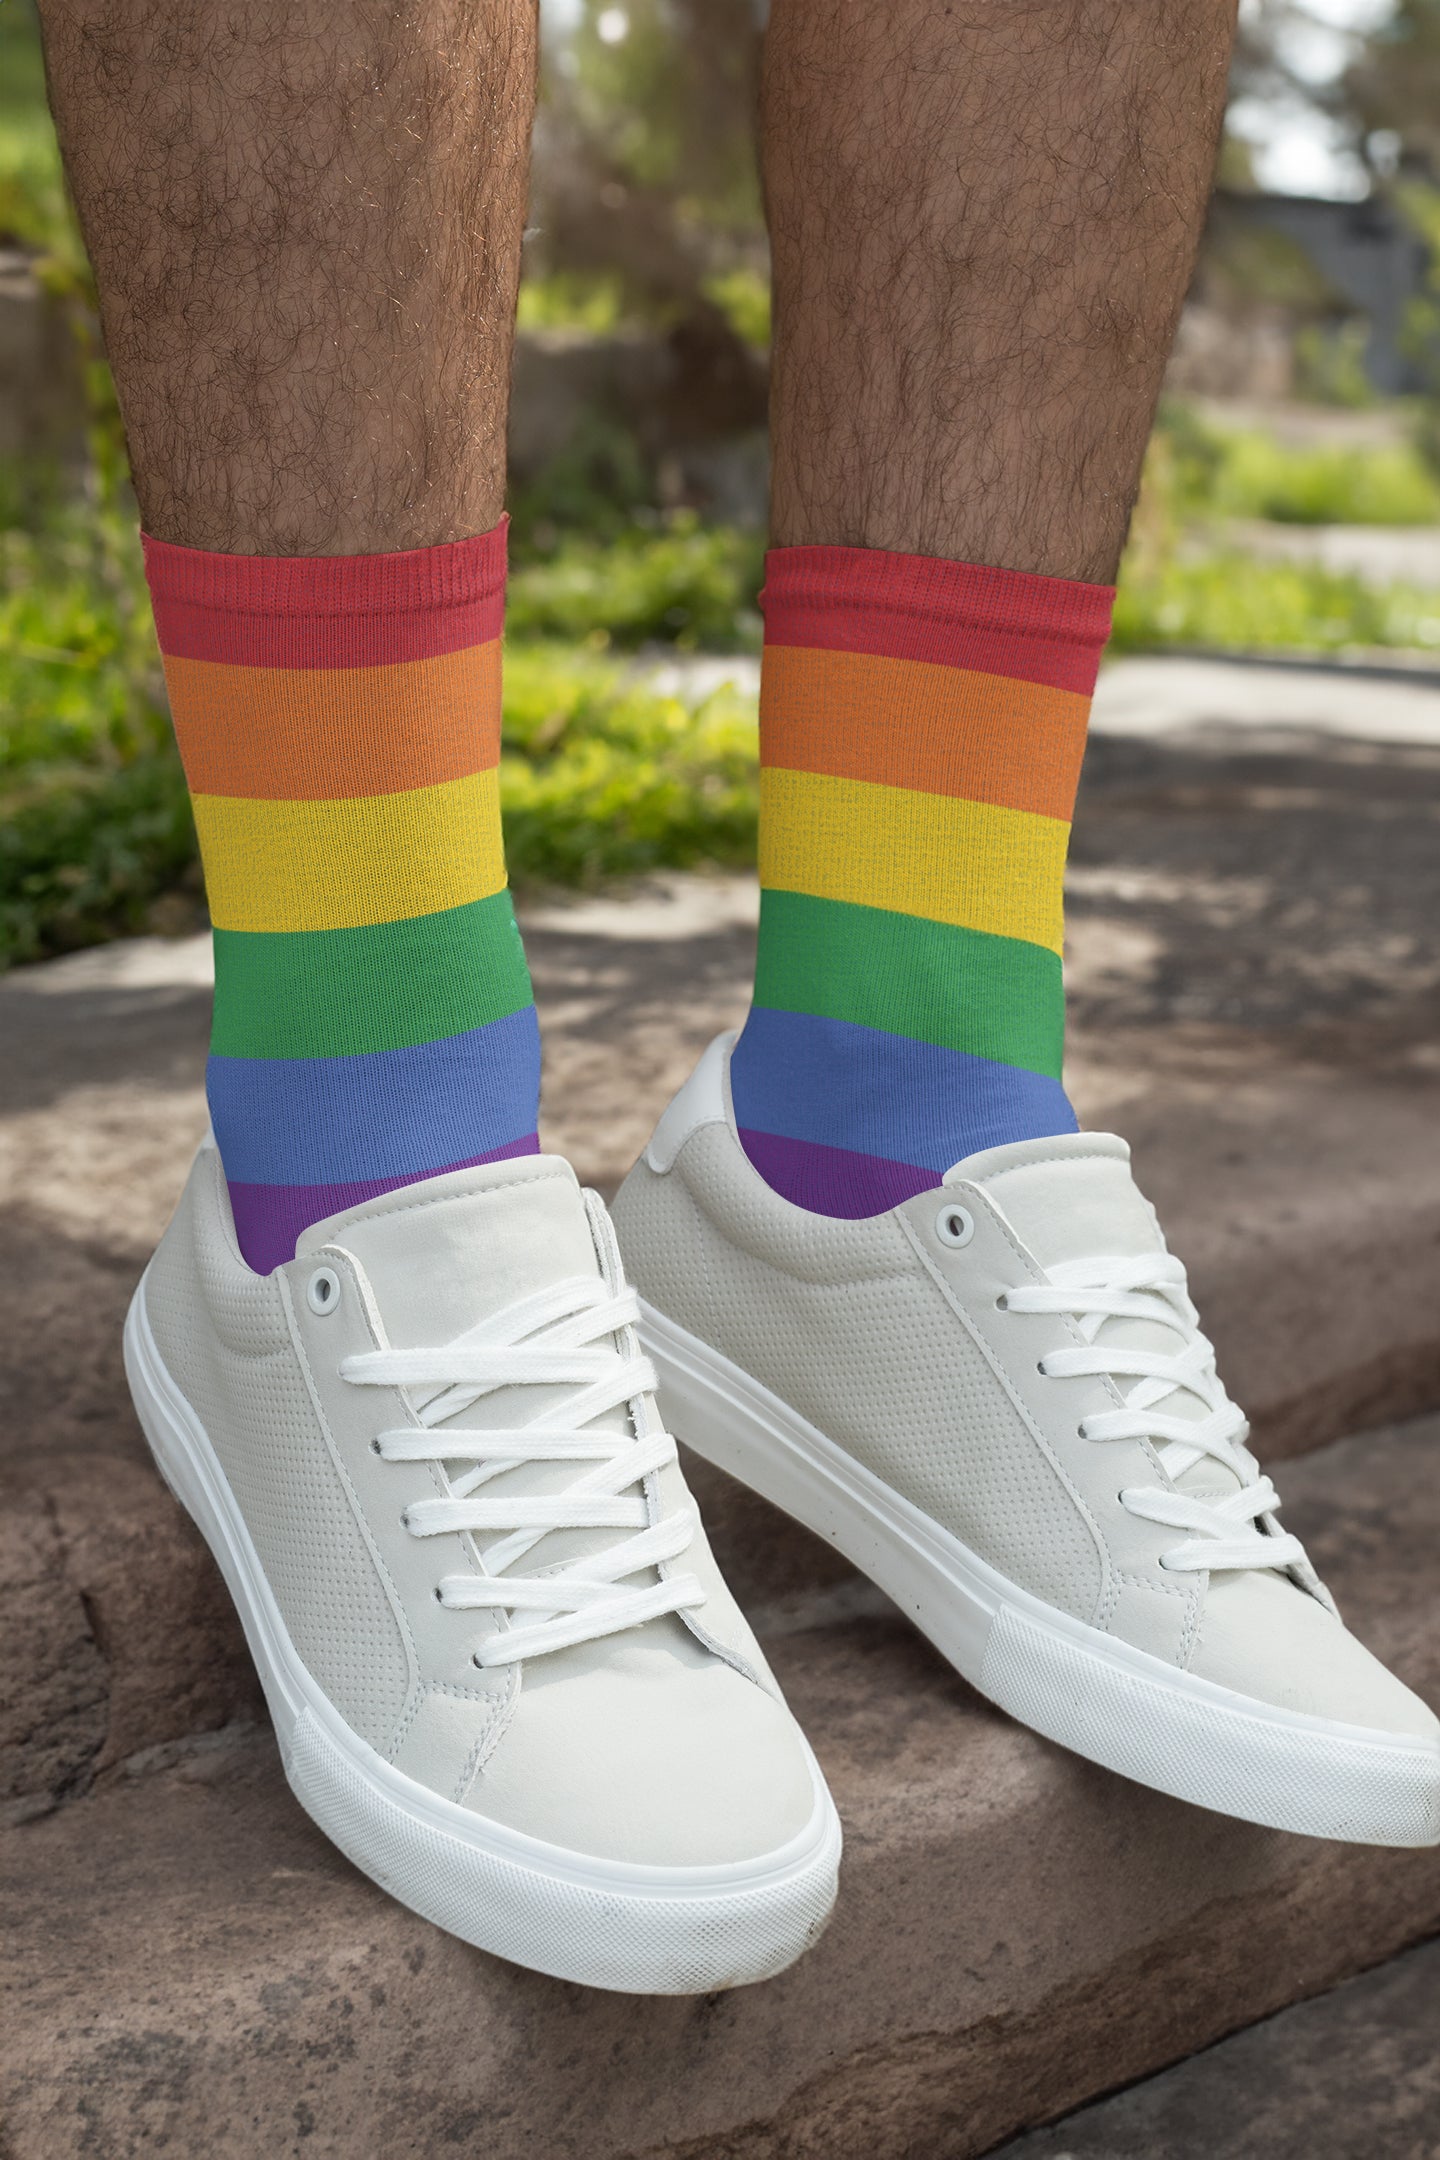 Rainbow LGBT Pride Crew Socks - Rose Gold Co. Shop